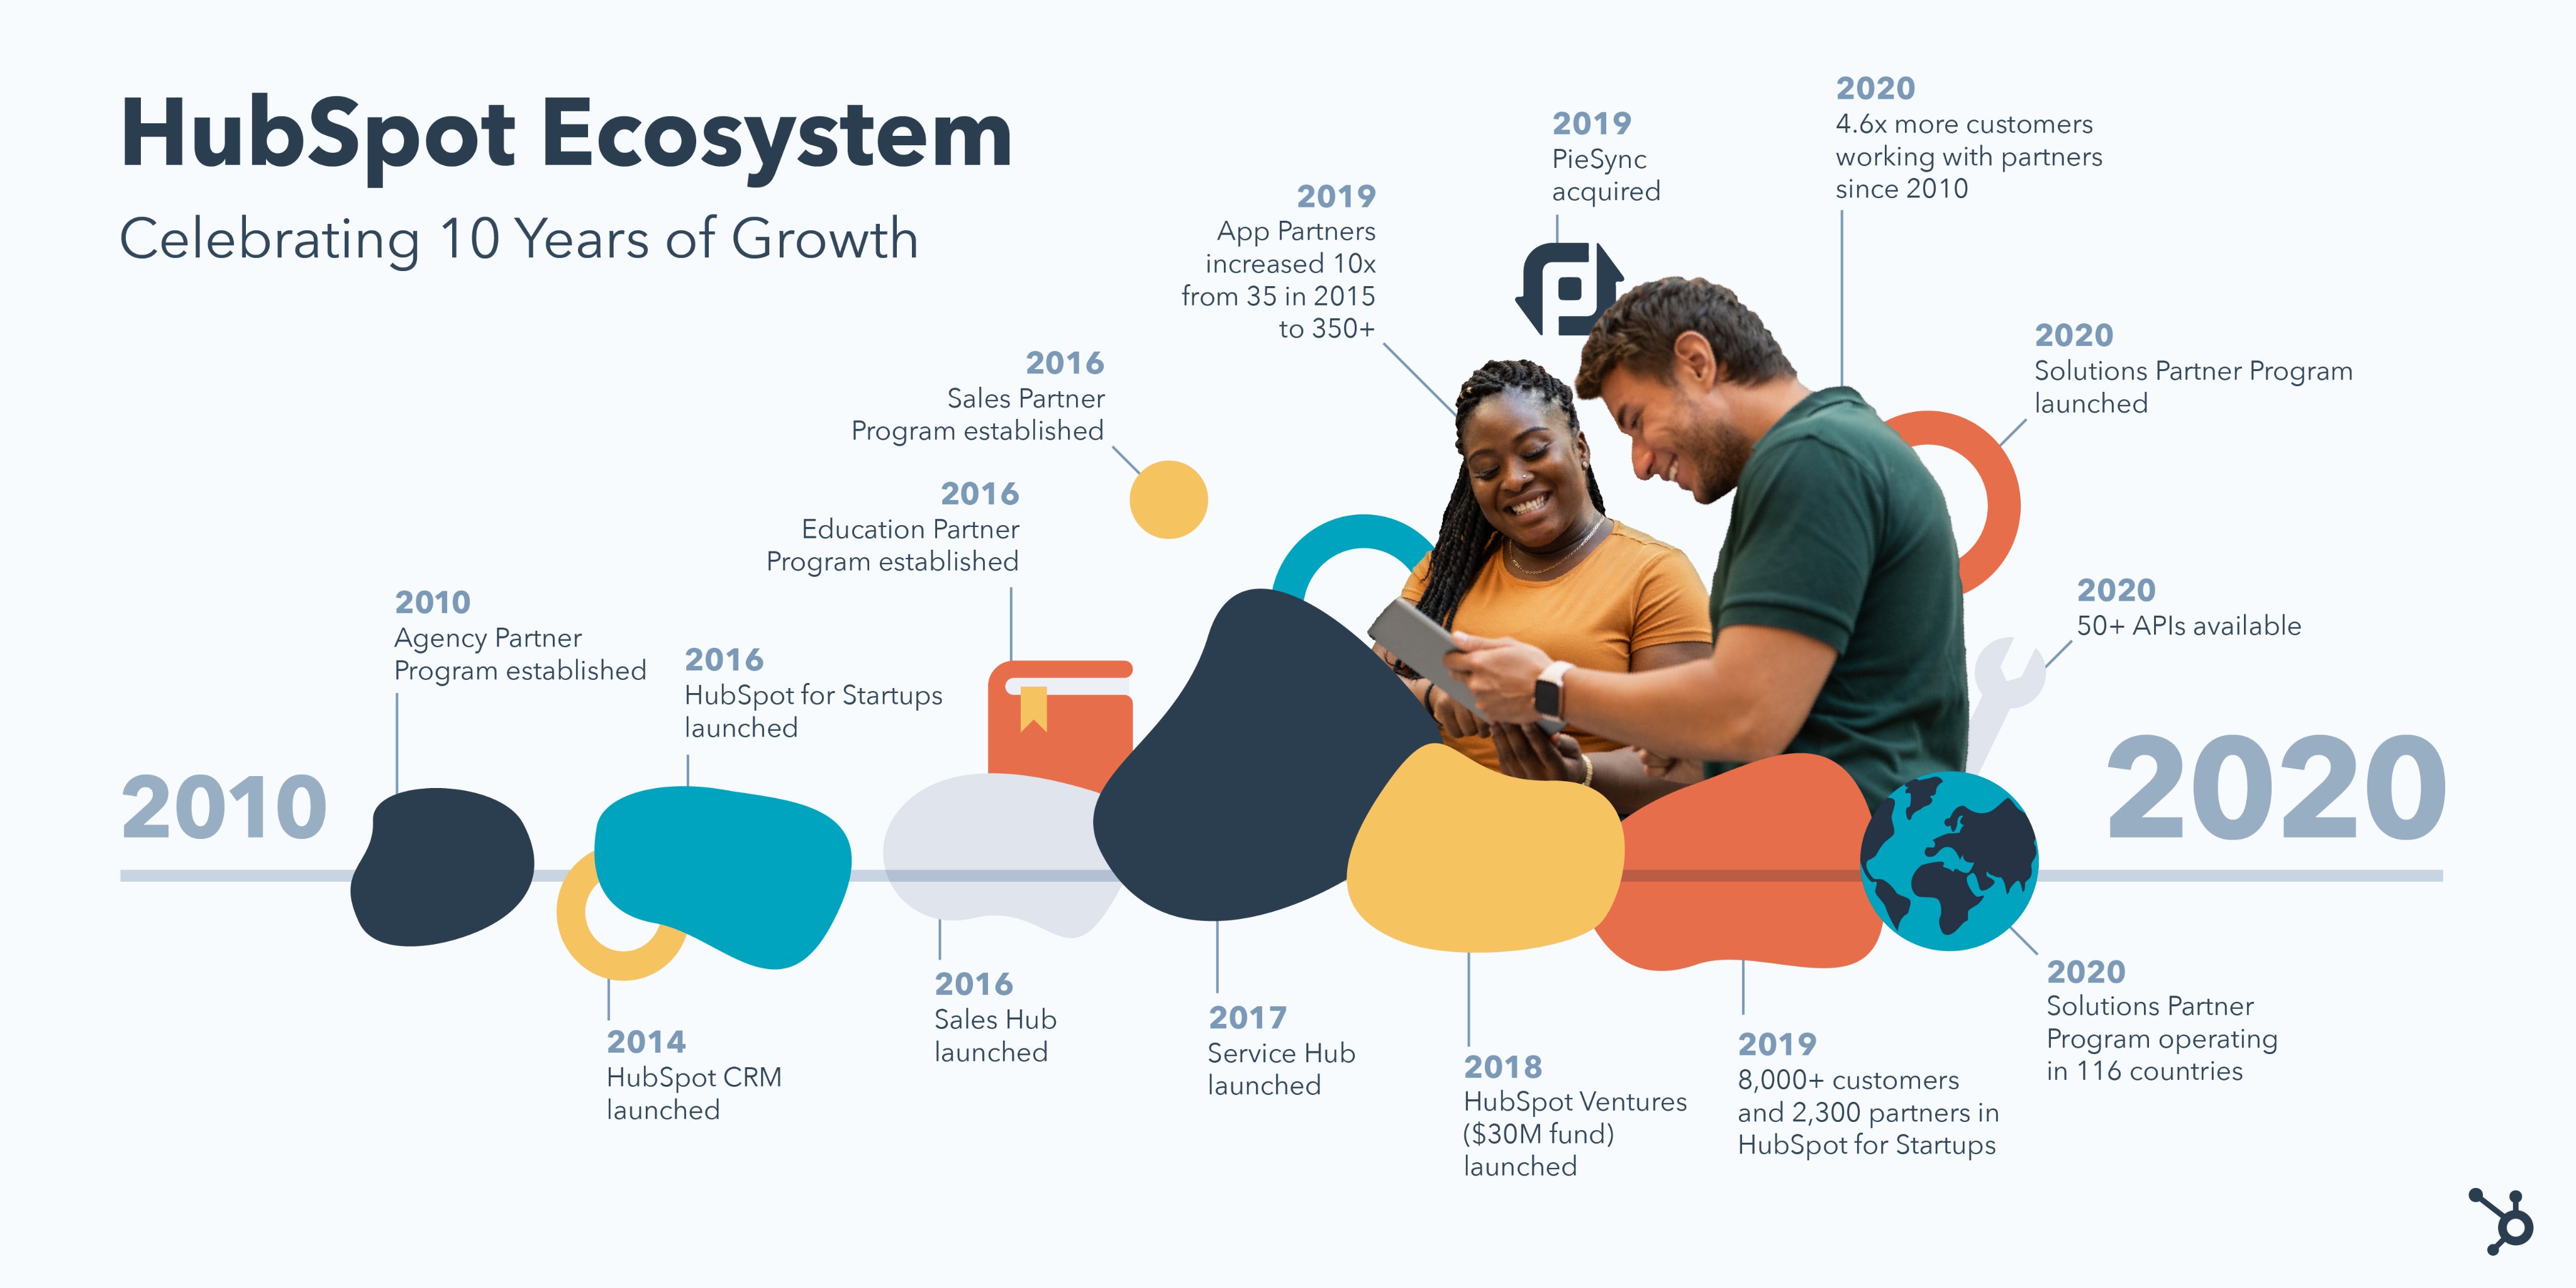 HubSpot Ecosystem - Celebrating 10 Years